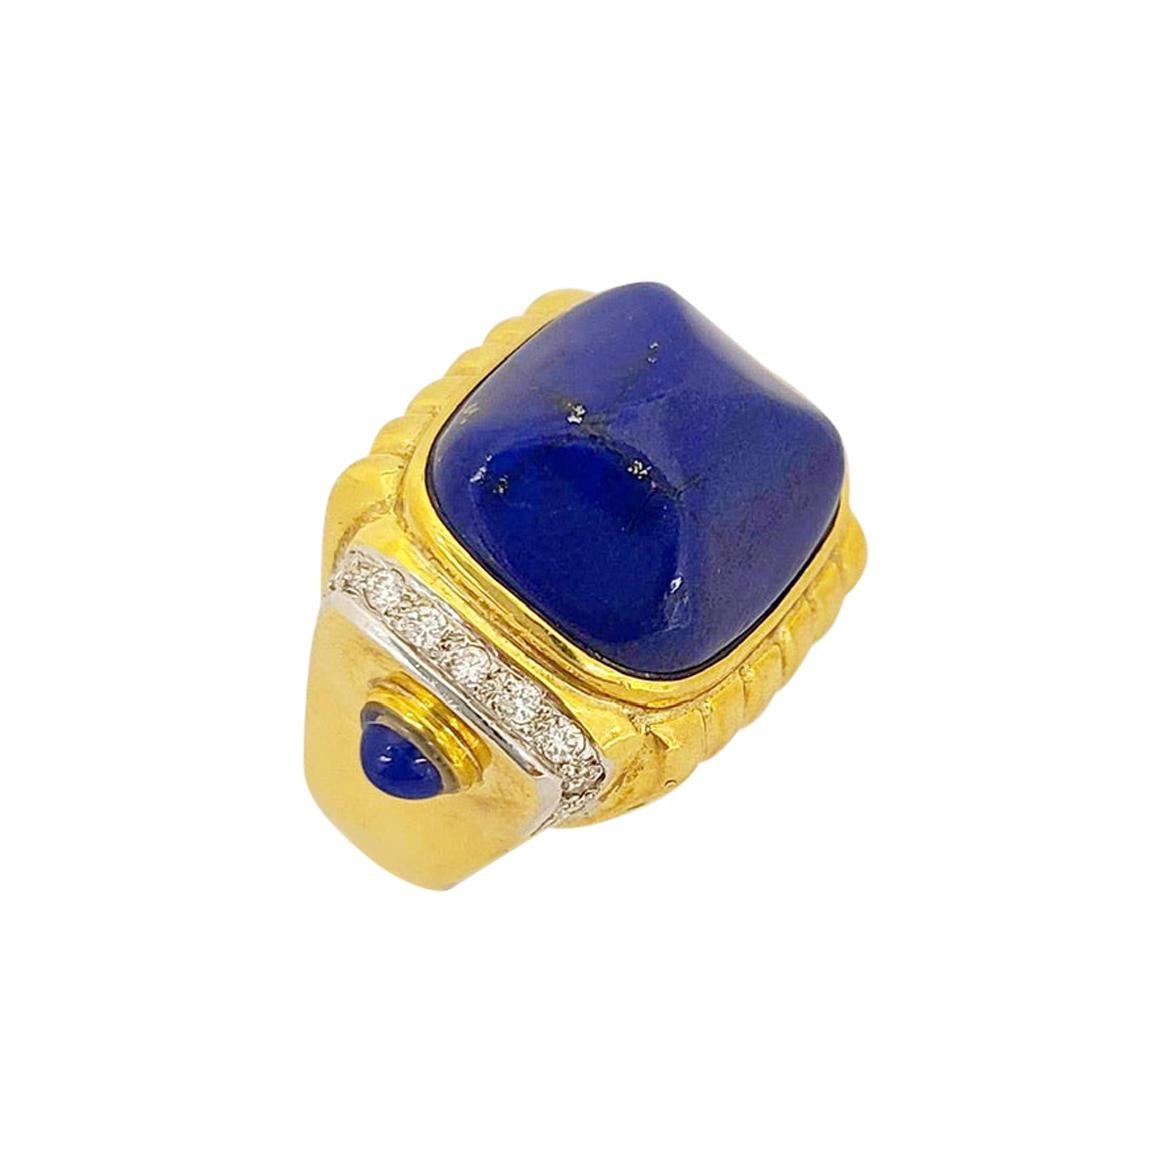 18 Karat Yellow Gold Ring with Lapis Lazuli and Diamond Ring